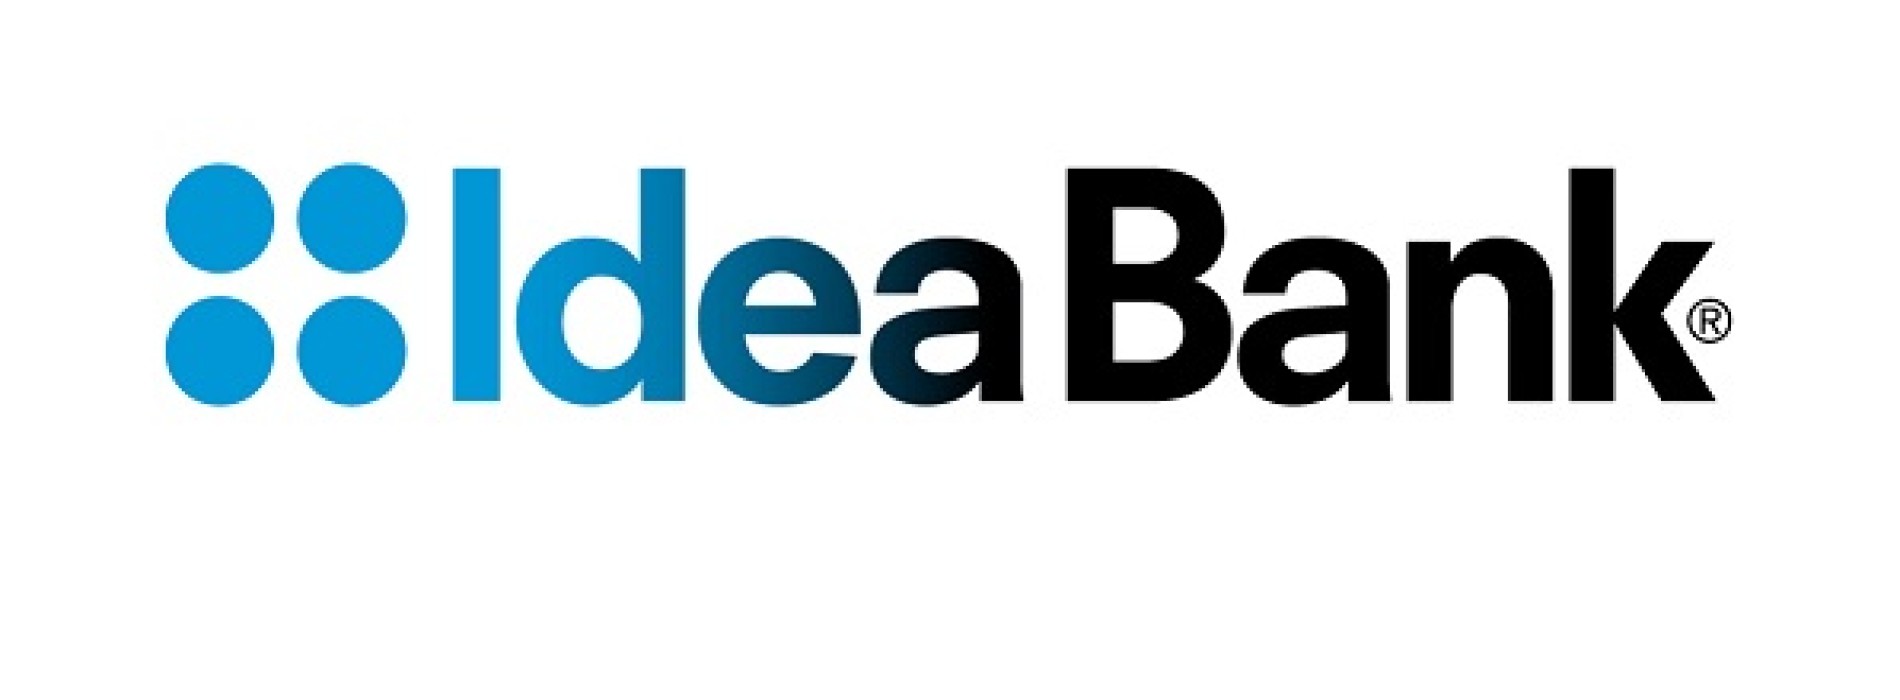 Idea Bank z prestiżową nagrodą SABRE Awards